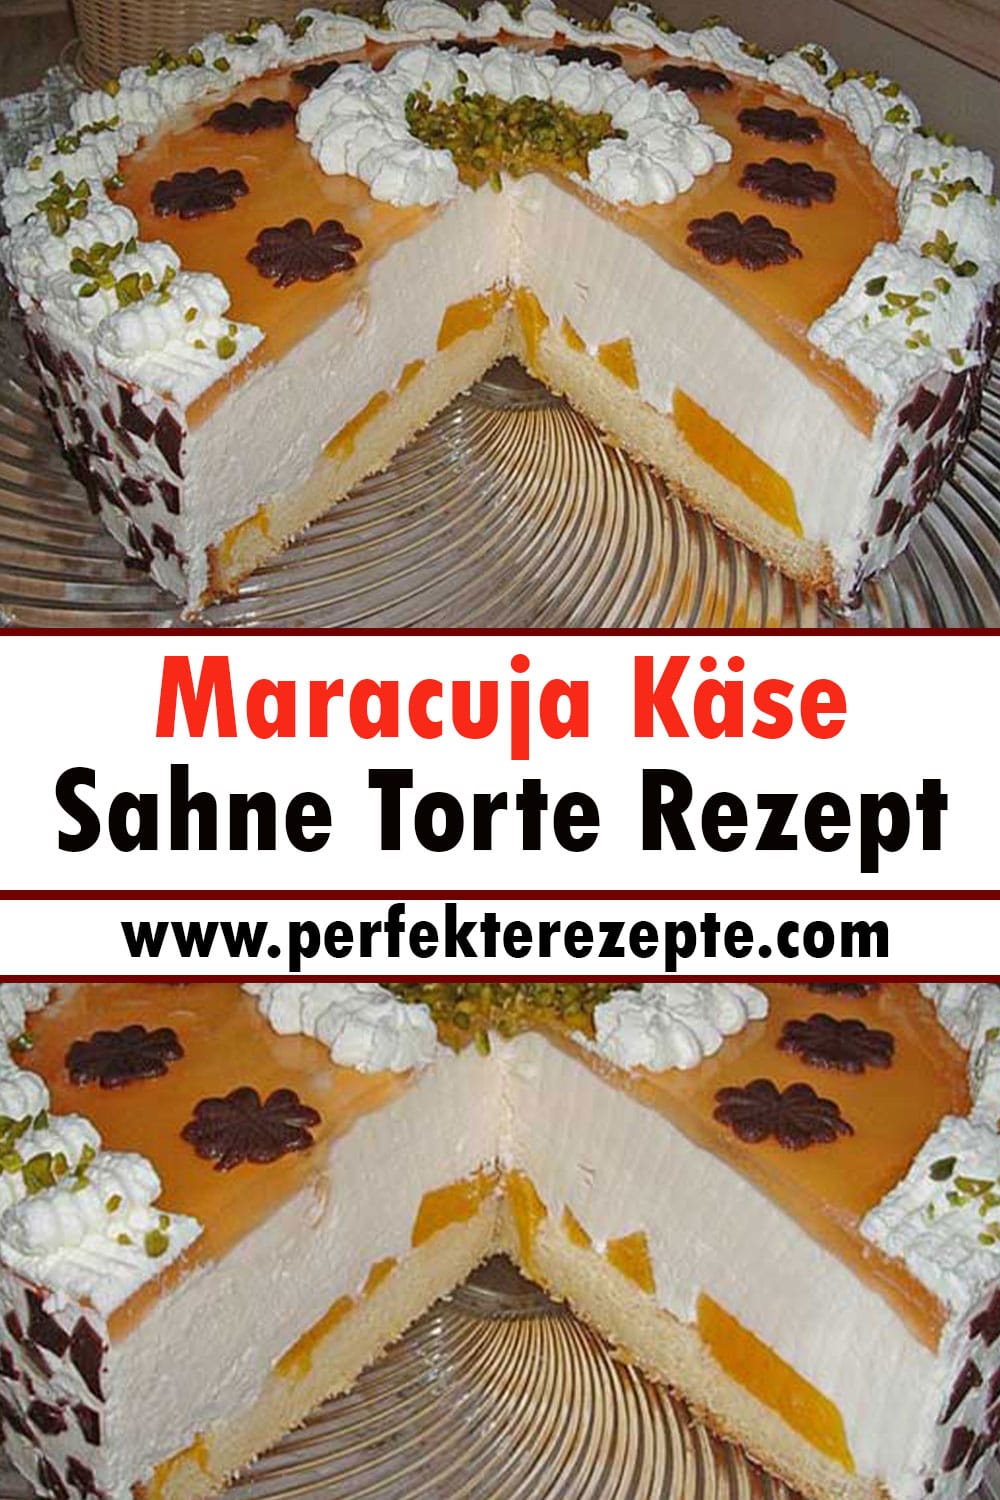 Maracuja Käse Sahne Torte Rezept